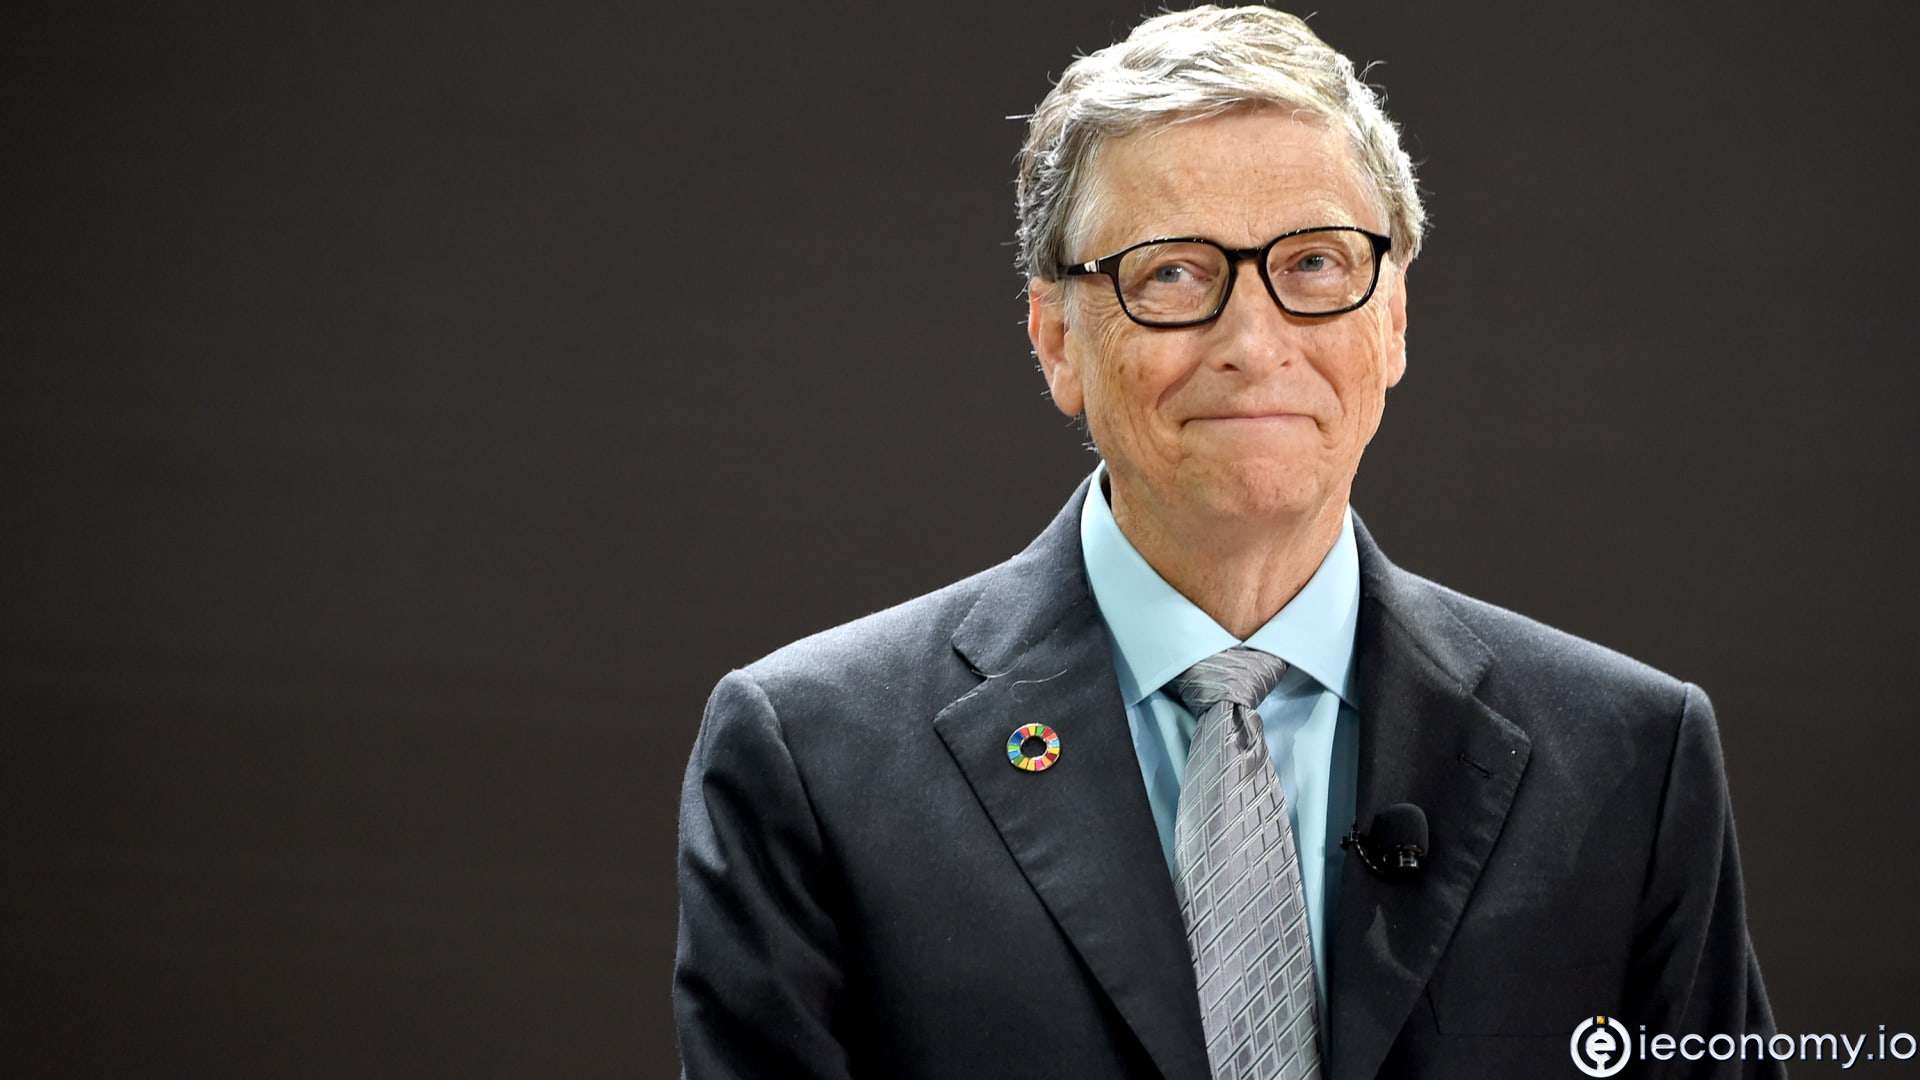 Bill Gates Koronavirüse Yakalandı